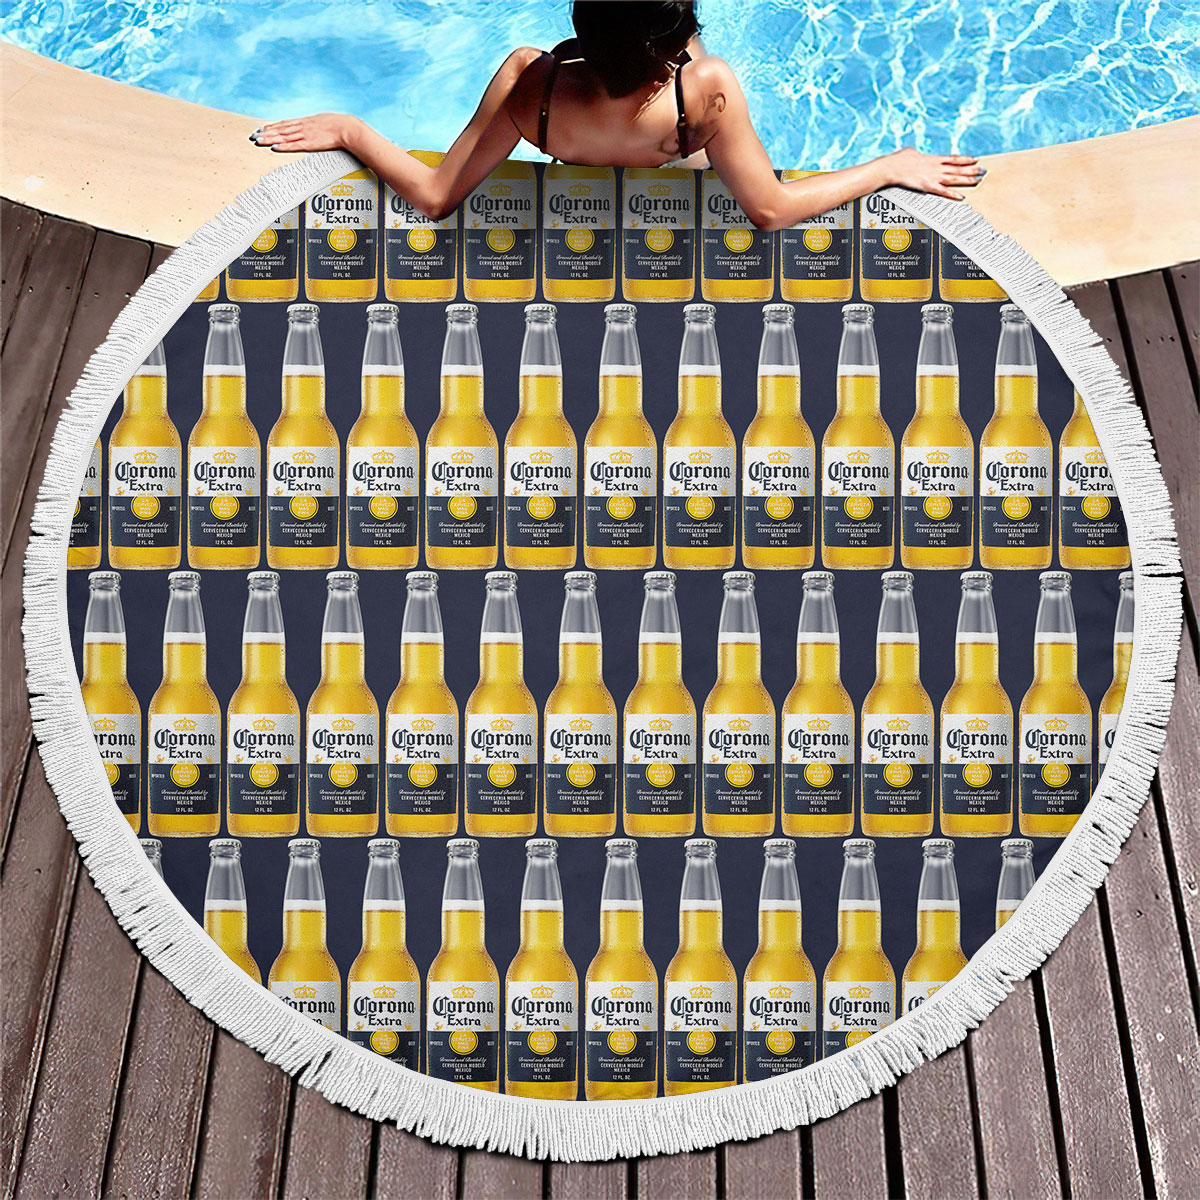 Coors Banquet Beer Round Beach Towel